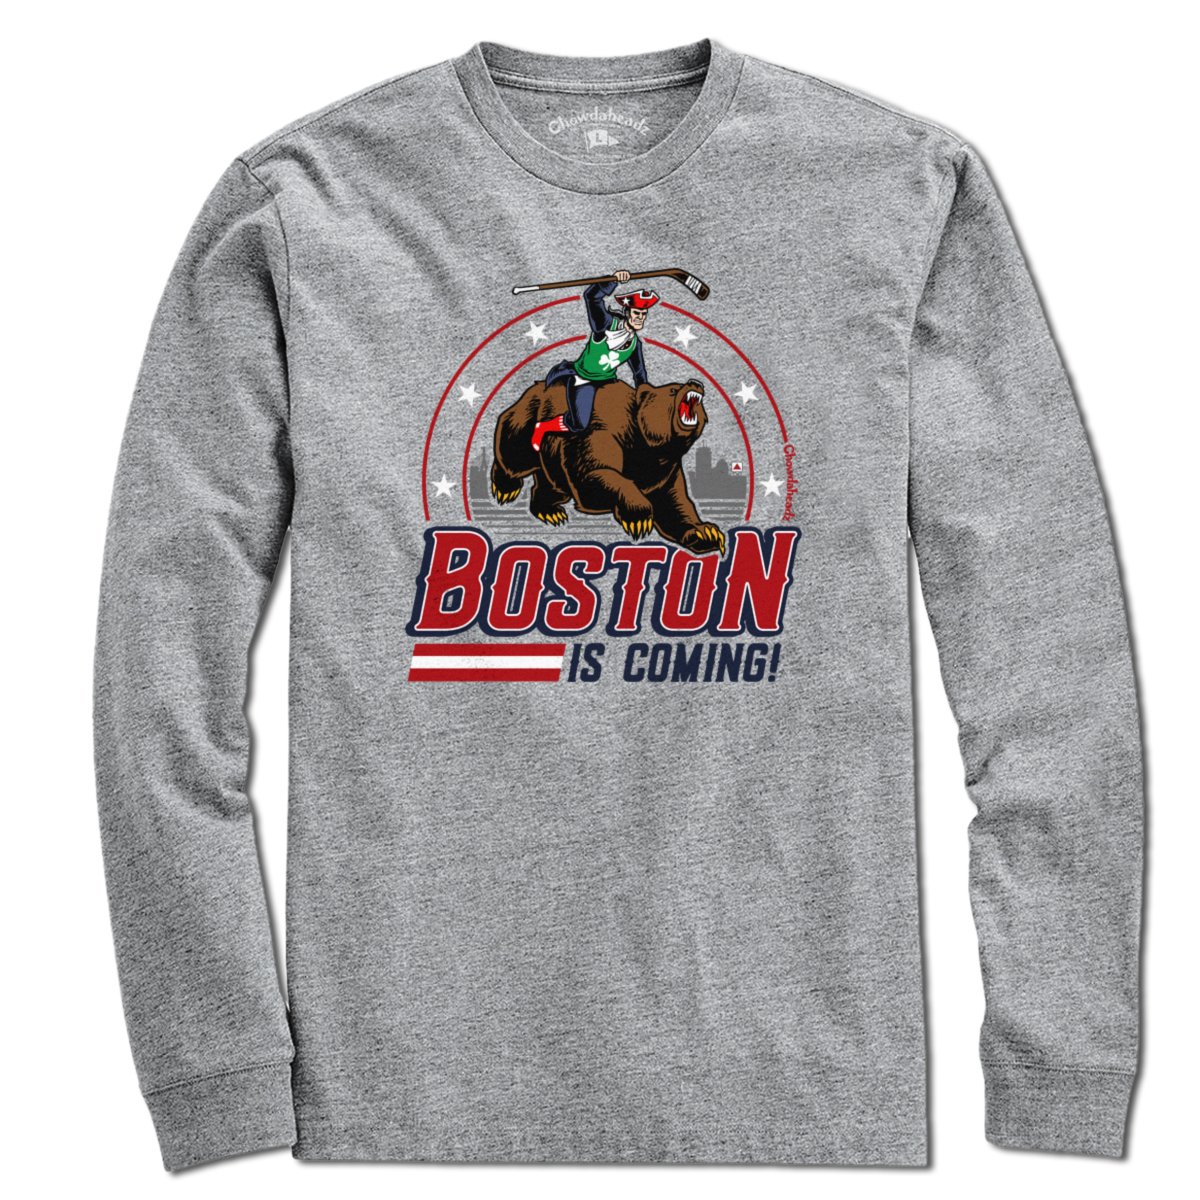 Boston is Coming T-Shirt - Chowdaheadz